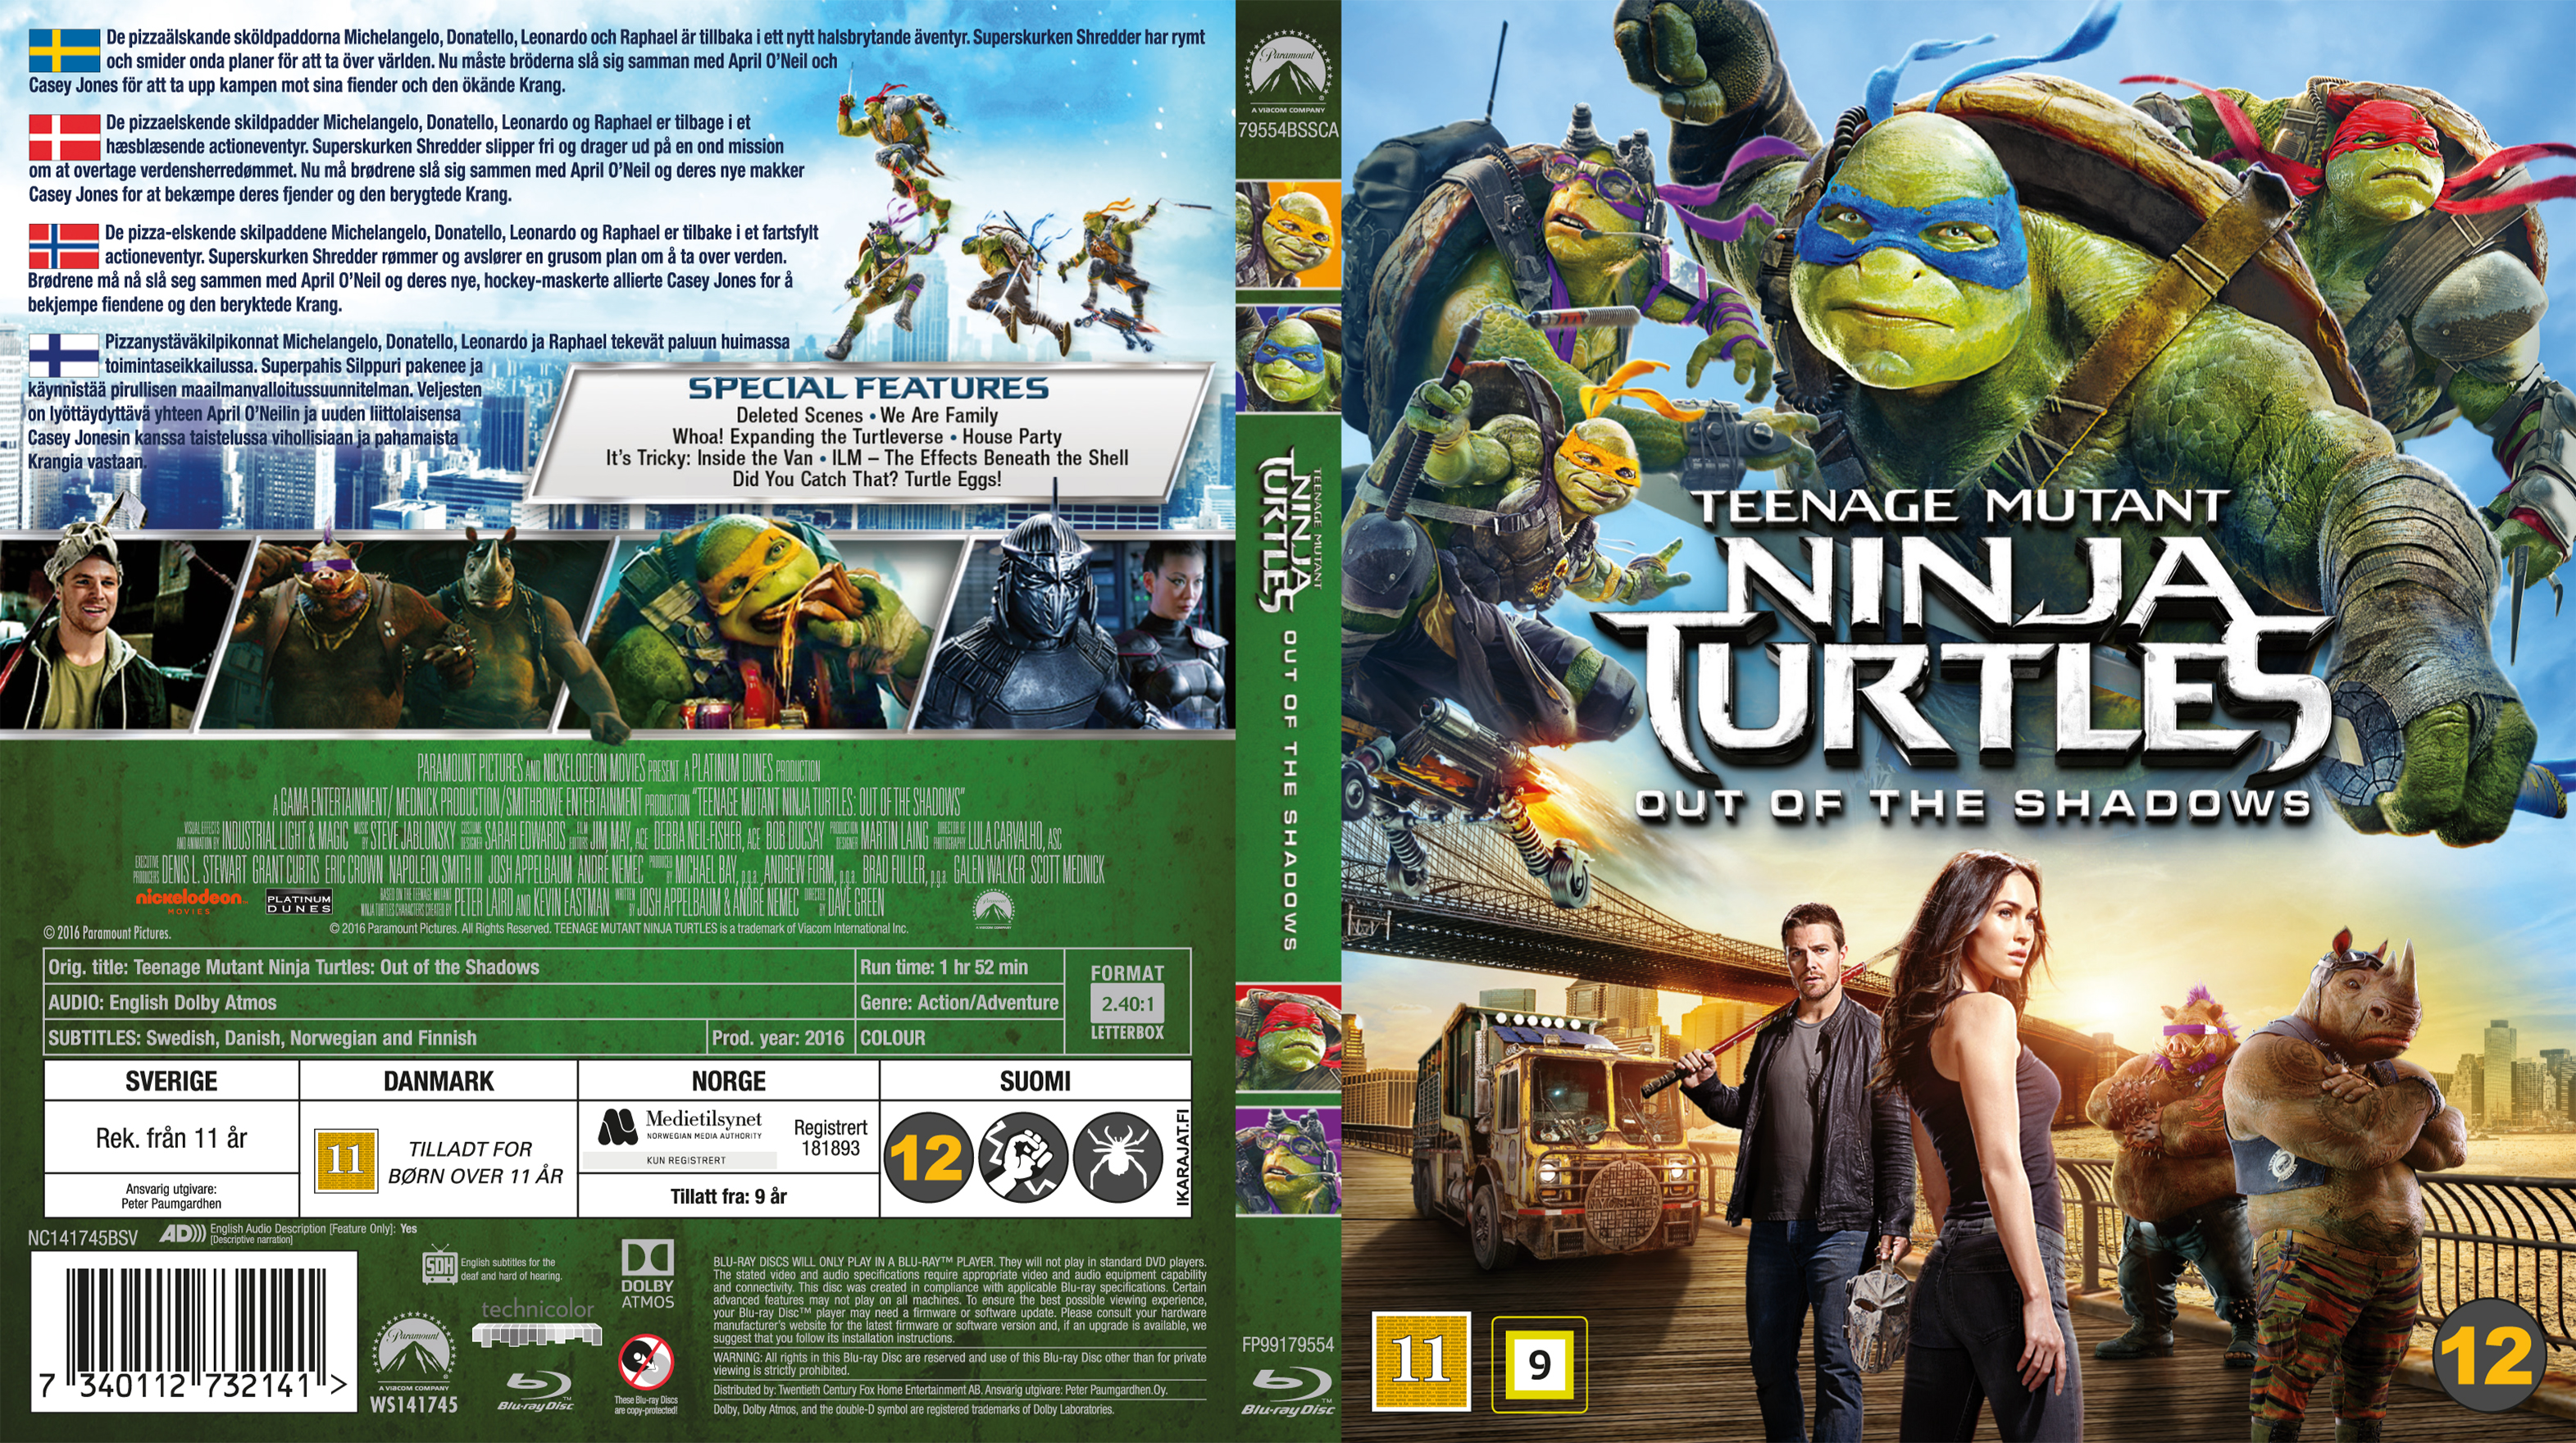 Teenage Mutant Ninja Turtles: Out of the Shadows (DVD)